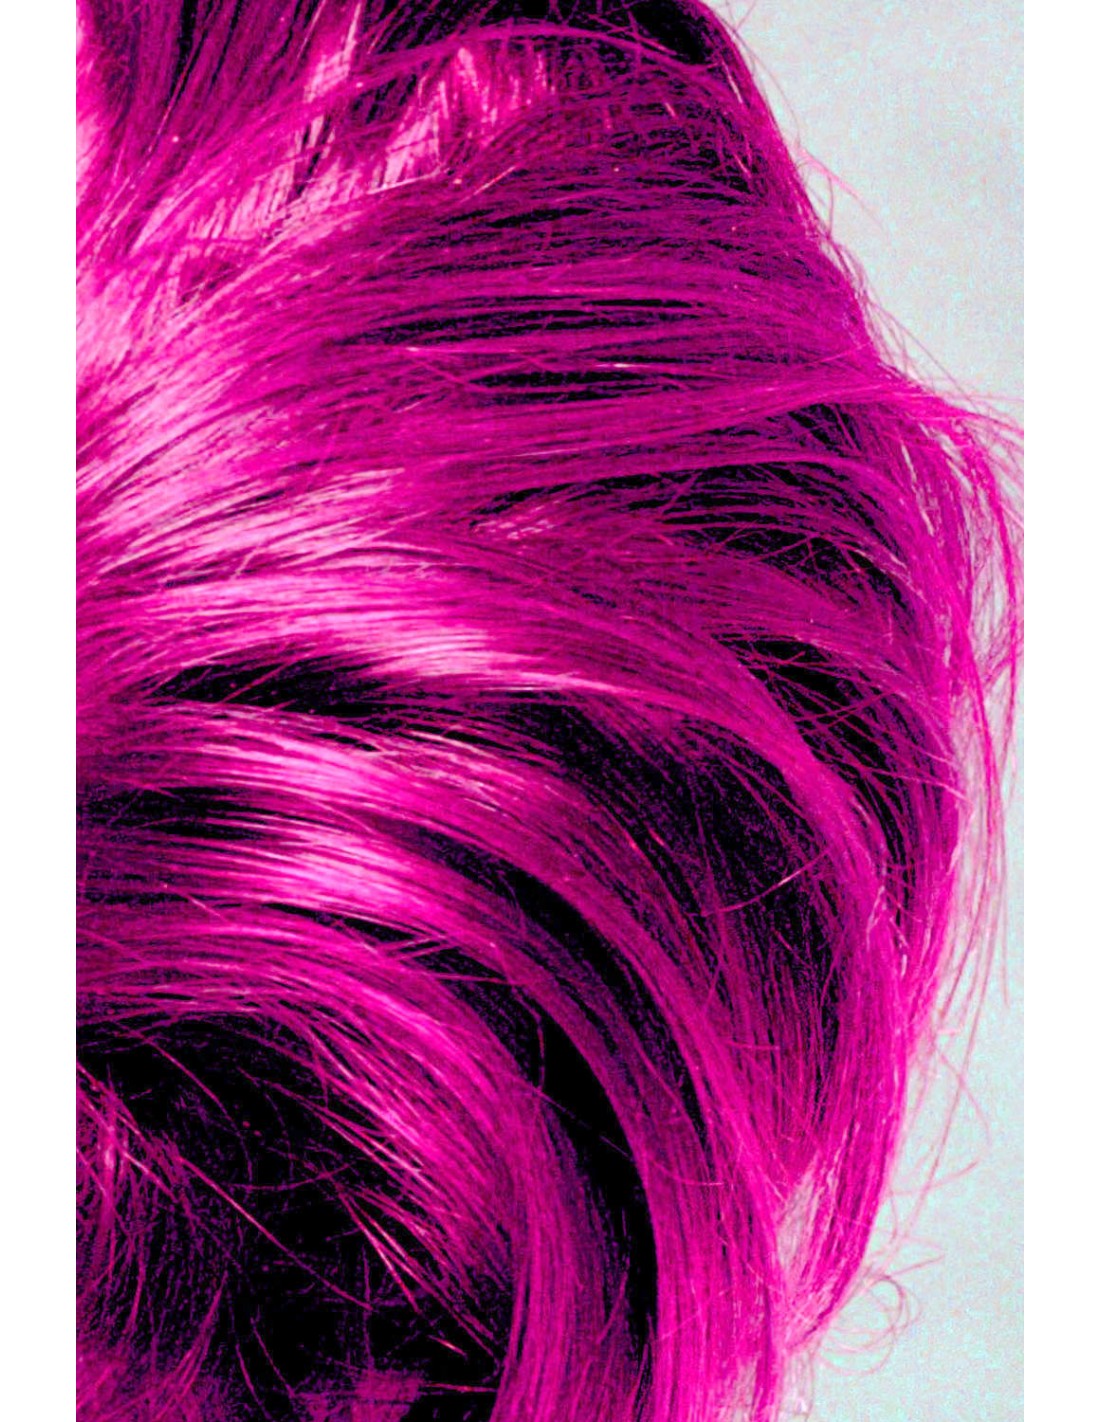 Manic Panic Hair Dye - Hot Hot Pink - Classic Cream Formula